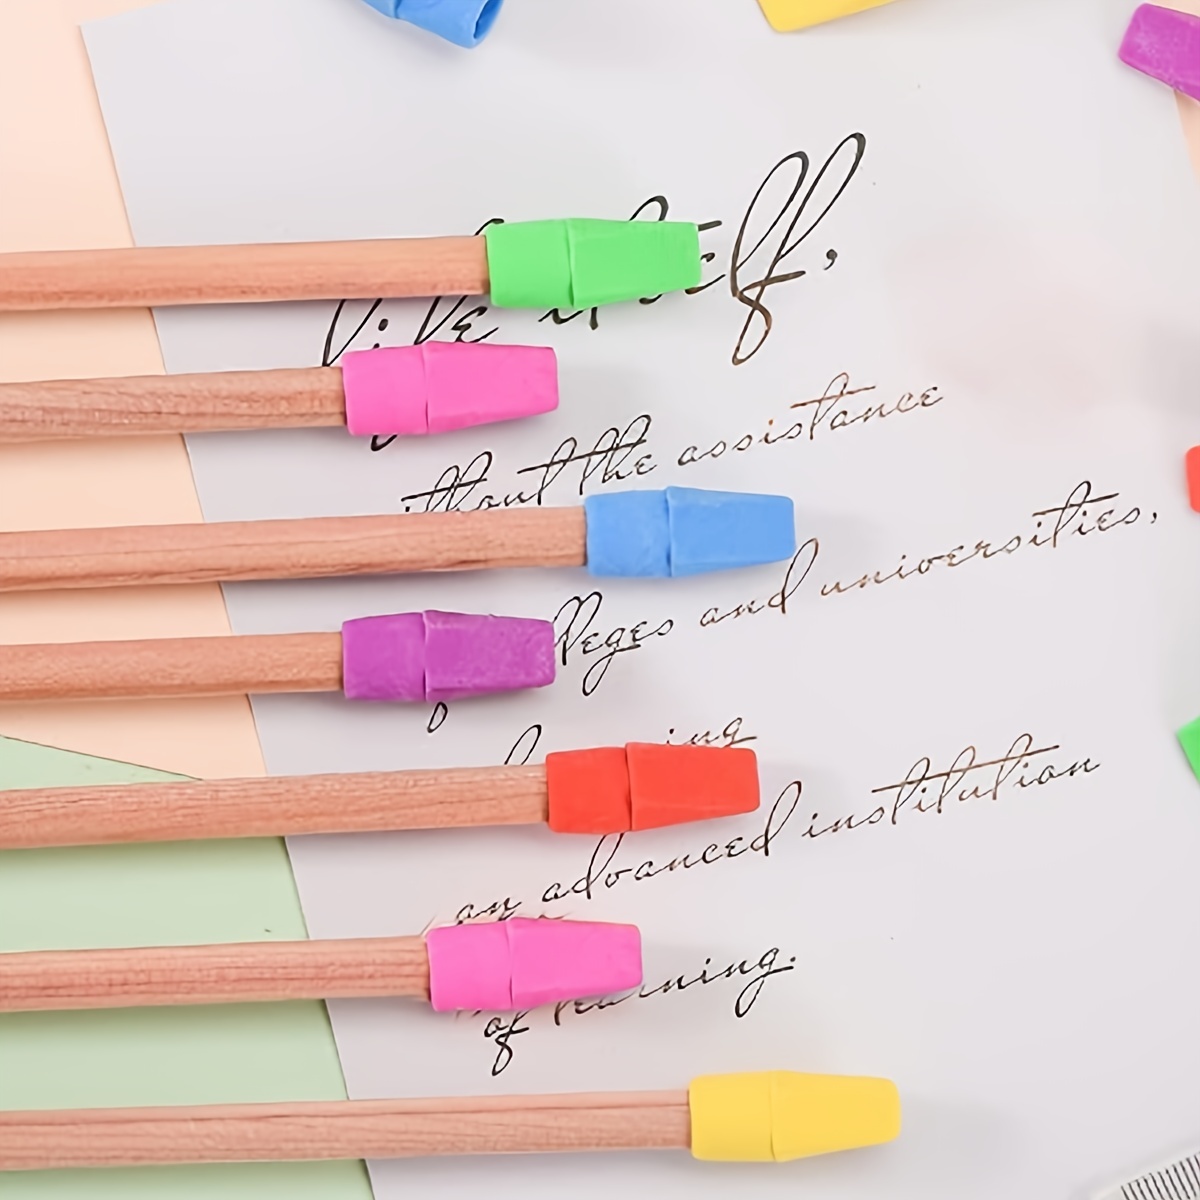 Colored Pencil Eraser 